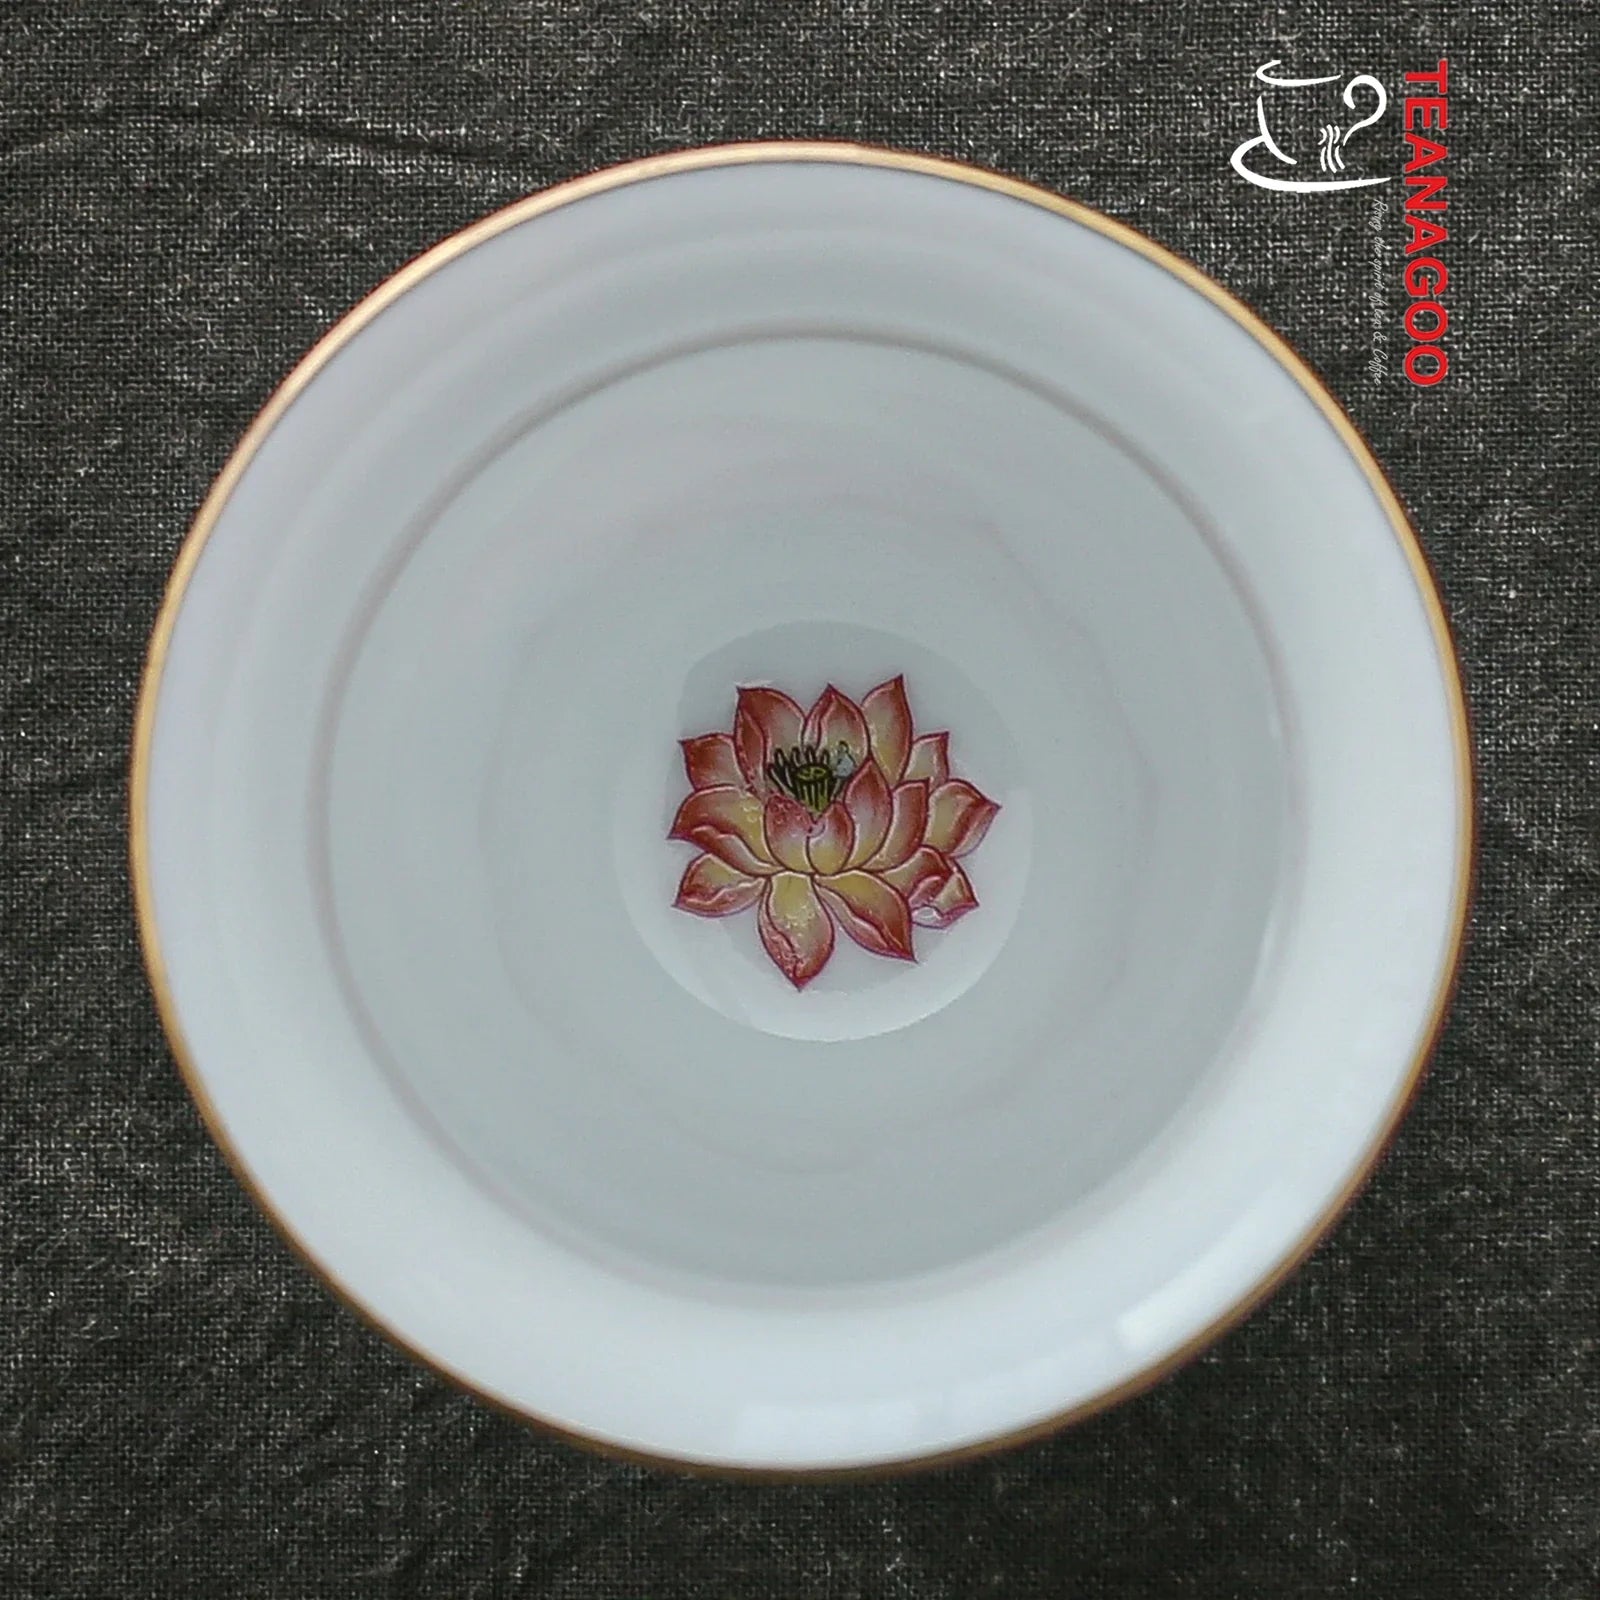 handmade porcelain teacup 80ml Chinese myth buddha ceramic cup